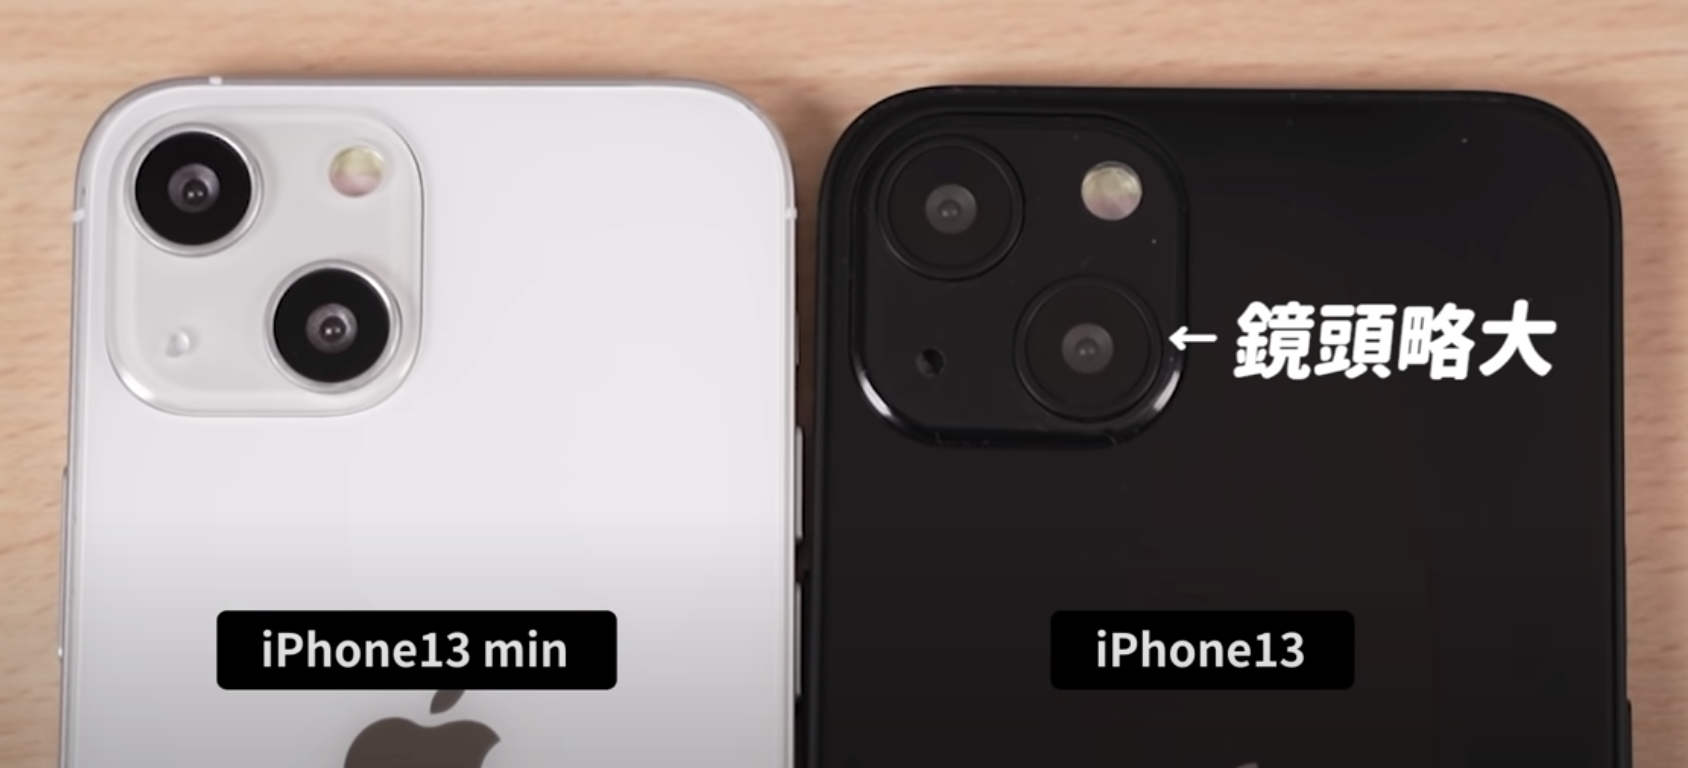 iphone 13系列最终机模曝光,全系镜头模组增大